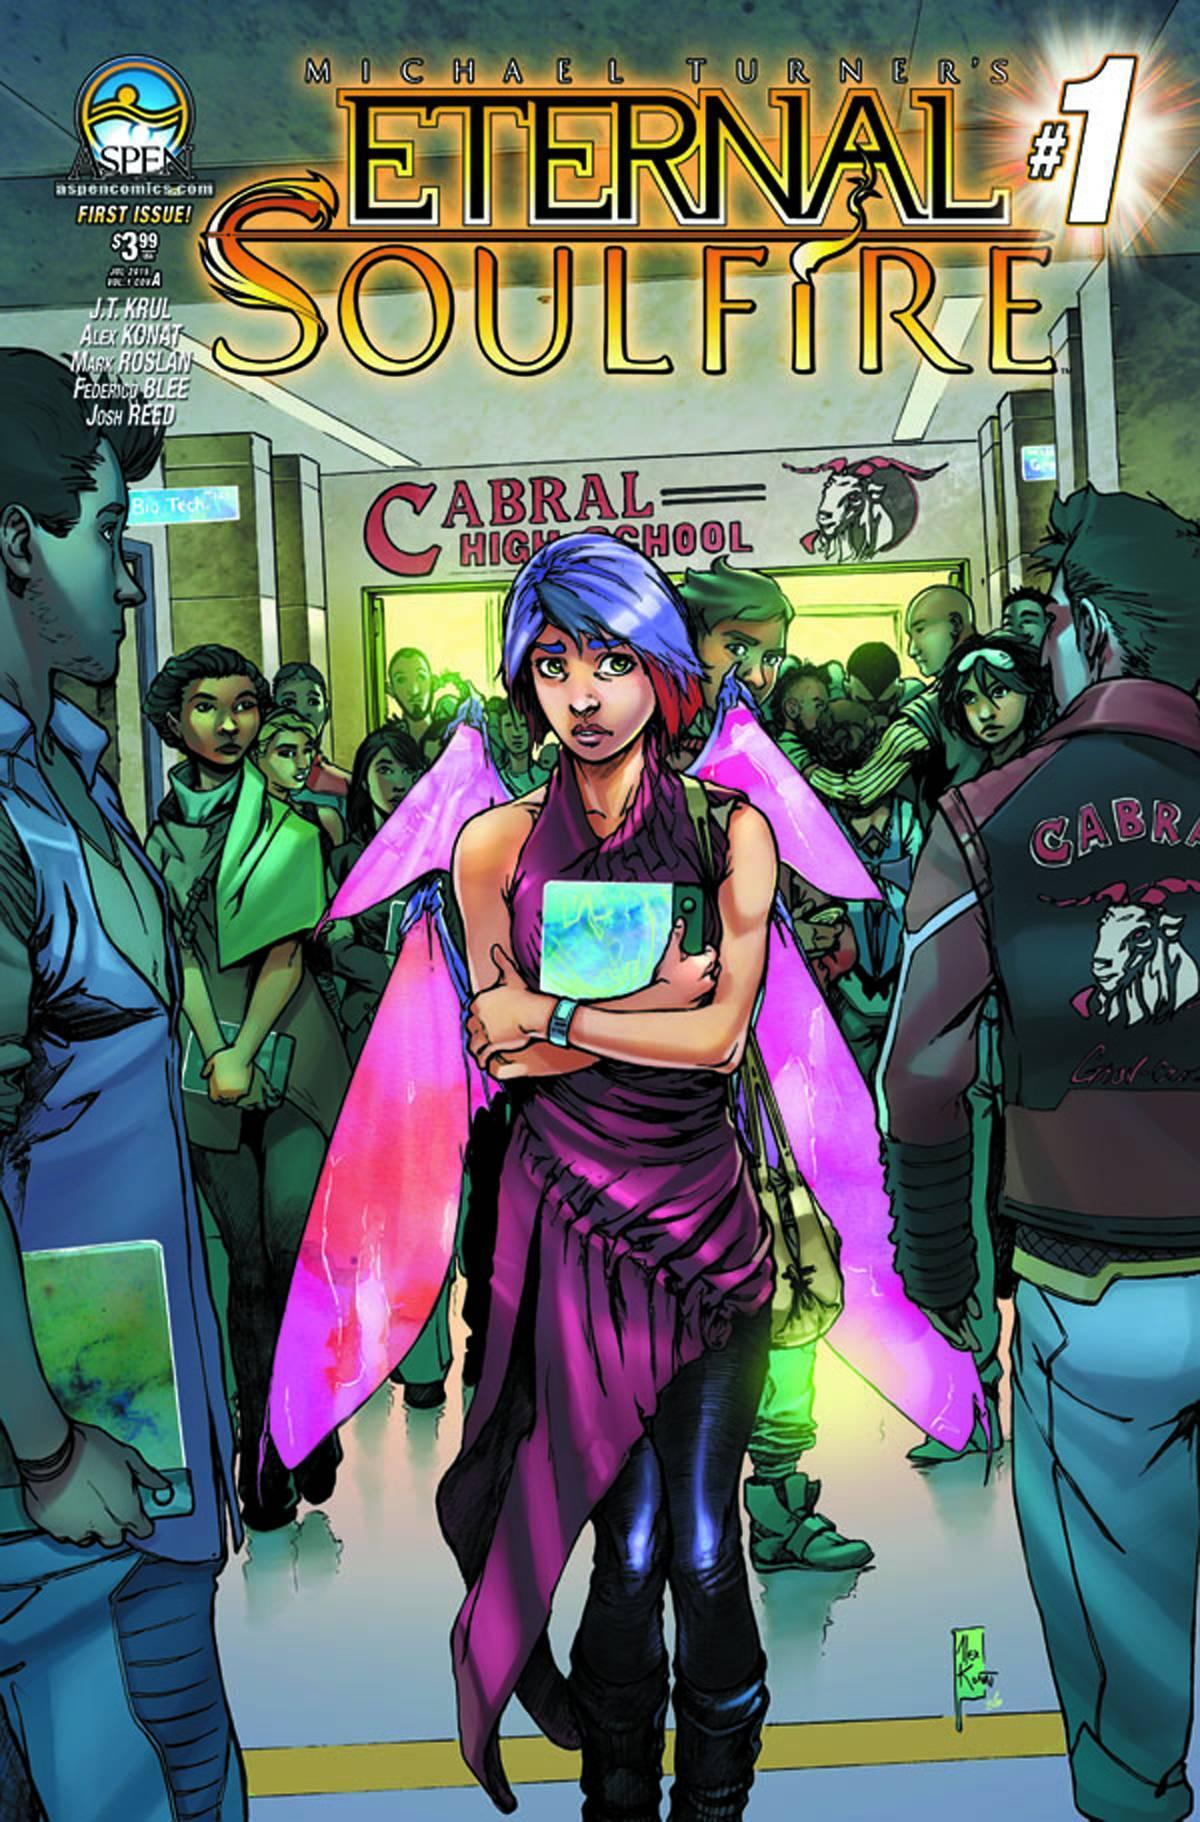 ETERNAL SOULFIRE #1 - Kings Comics